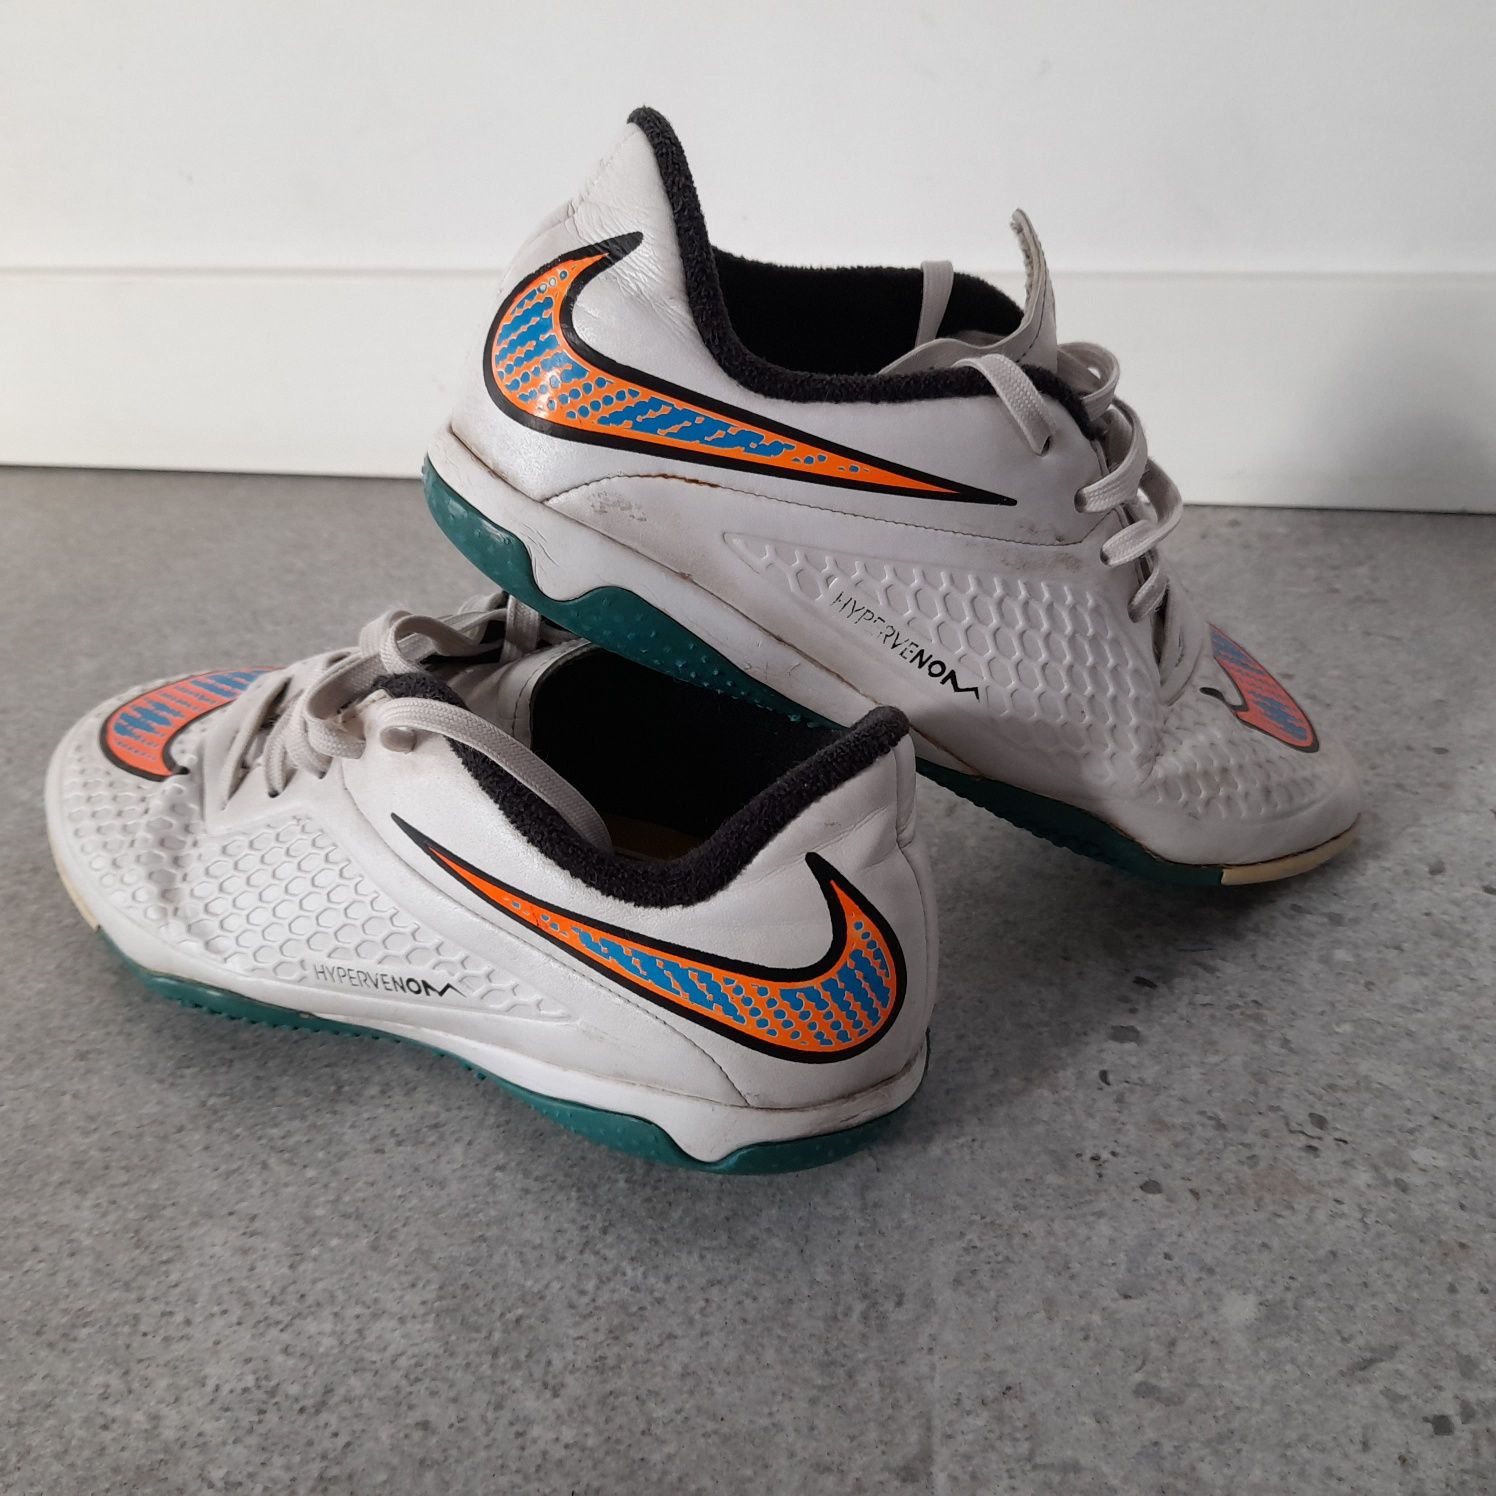 Buty do piłki nożnej Nike Hypervenom rozmiar.31